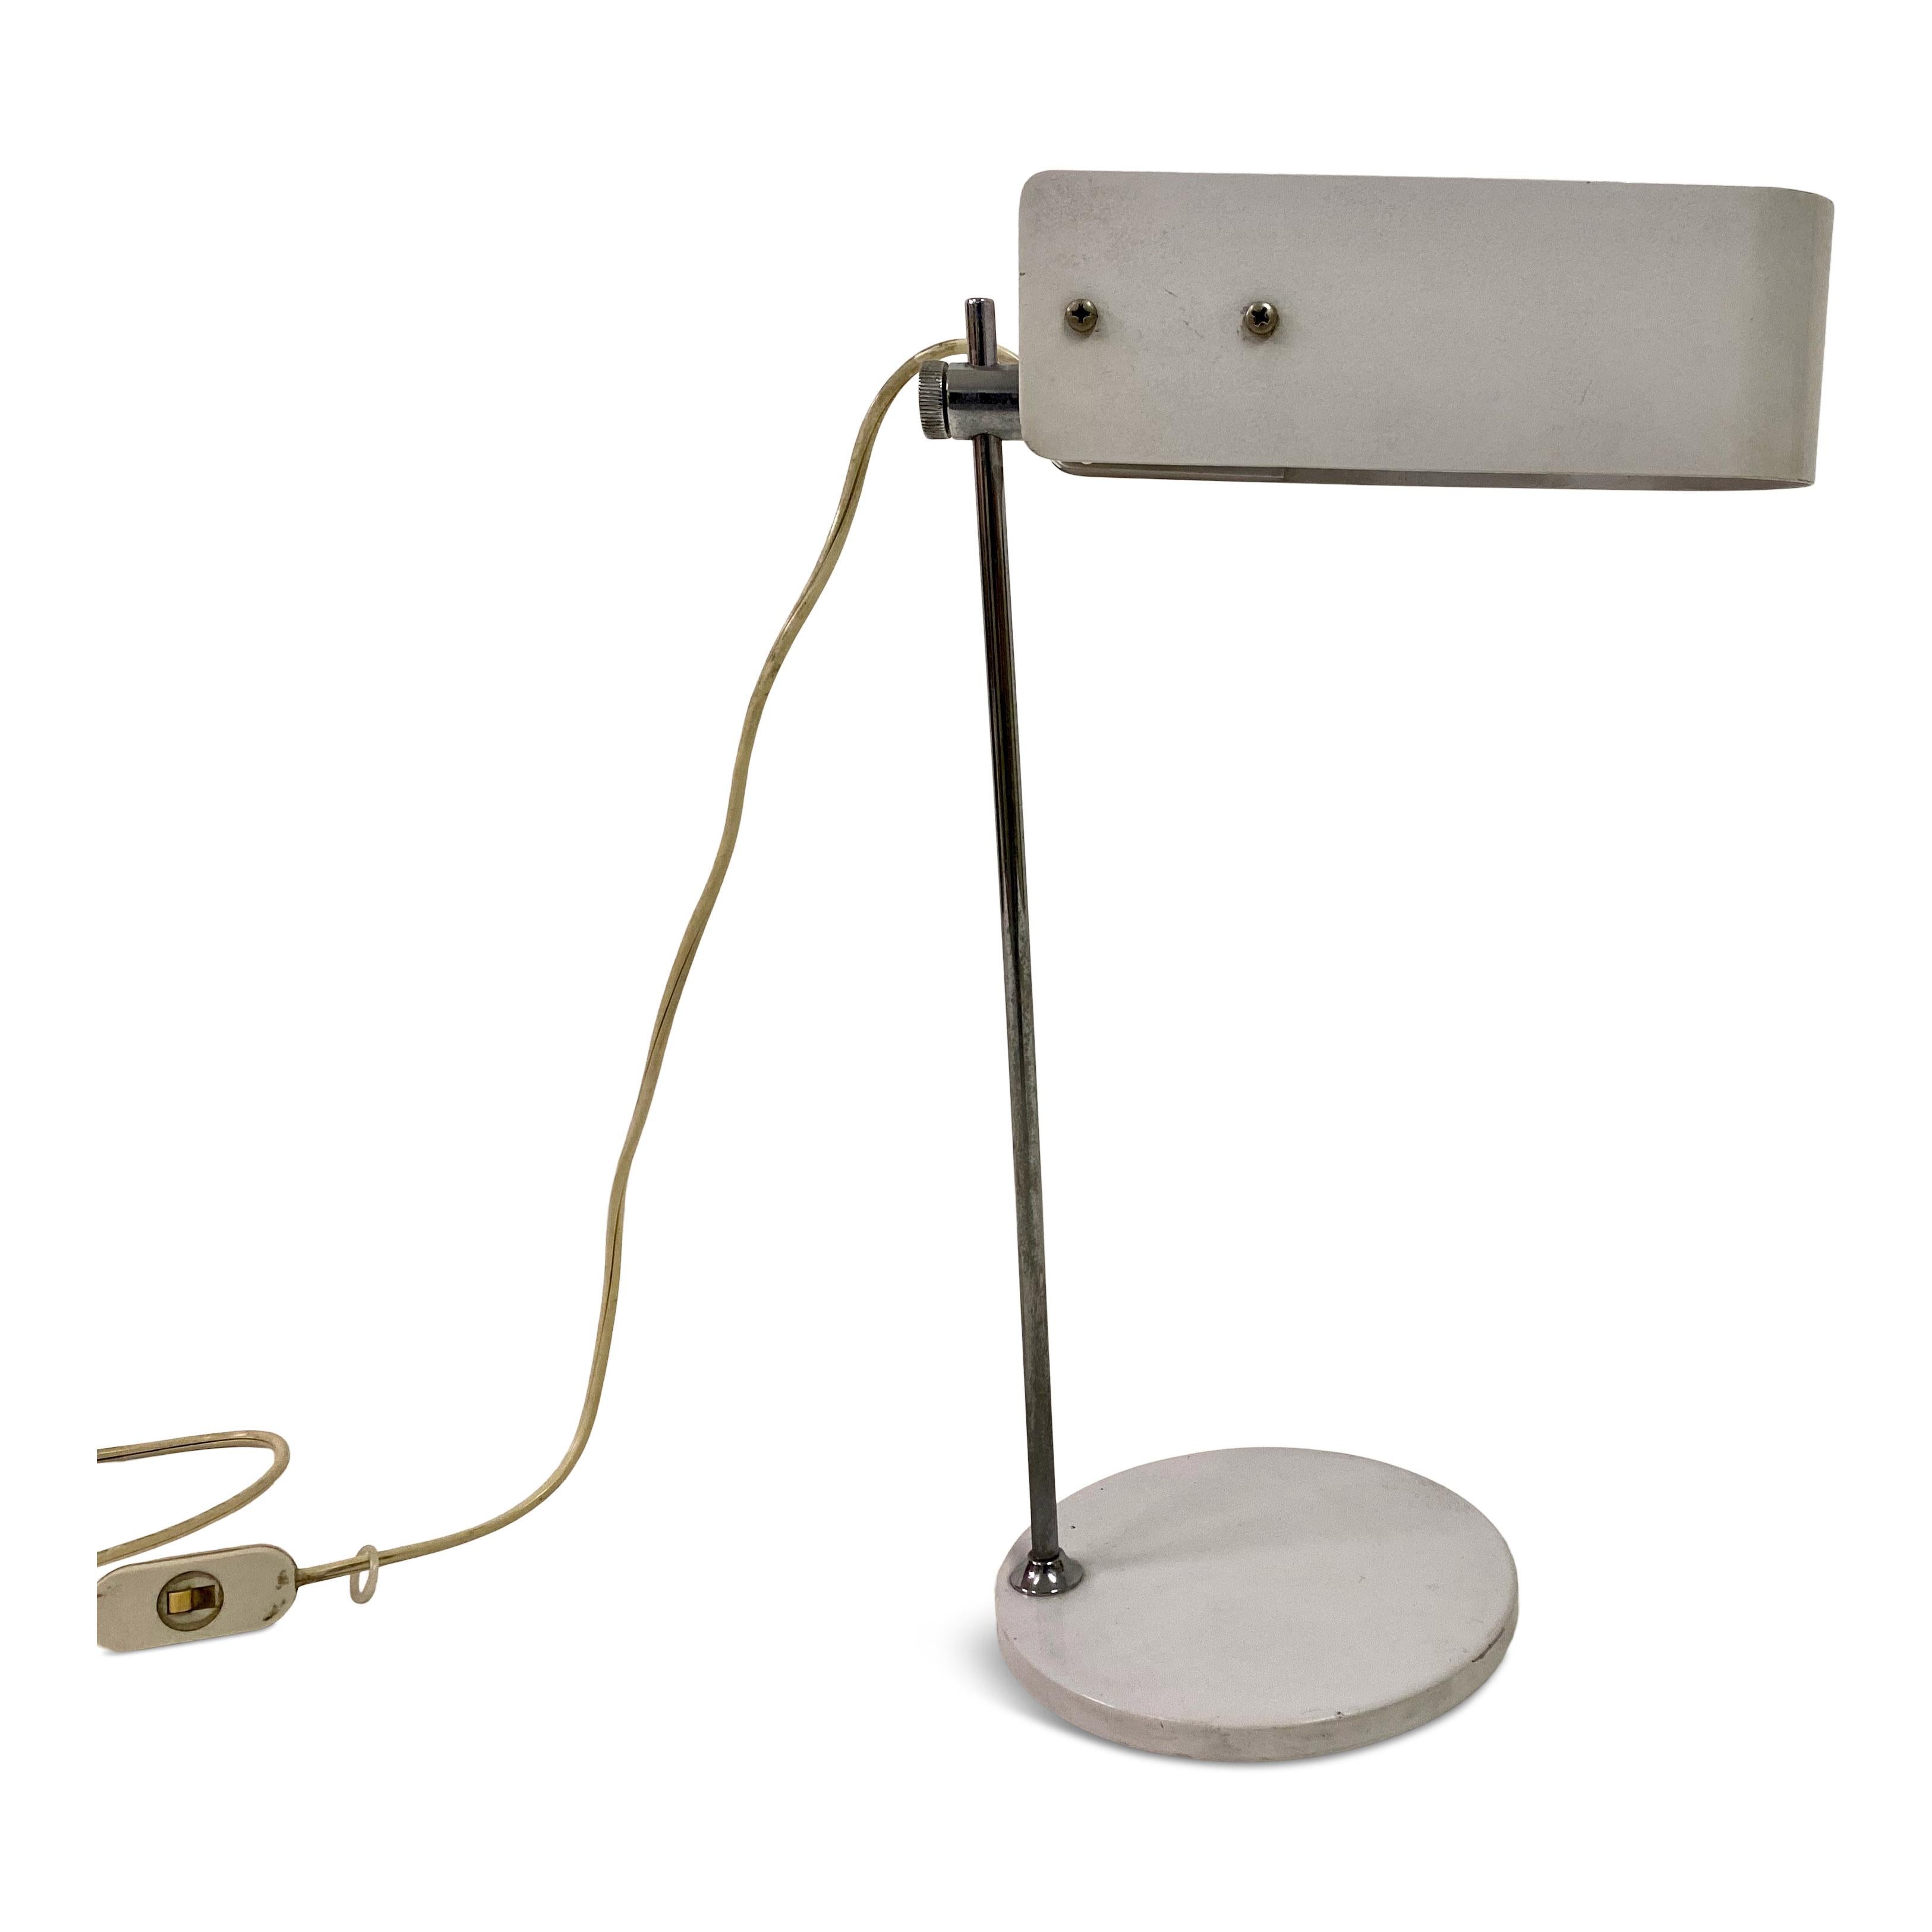 Desk lamp.

White painted metal shade.

Steel stem.

Italy 1960s.